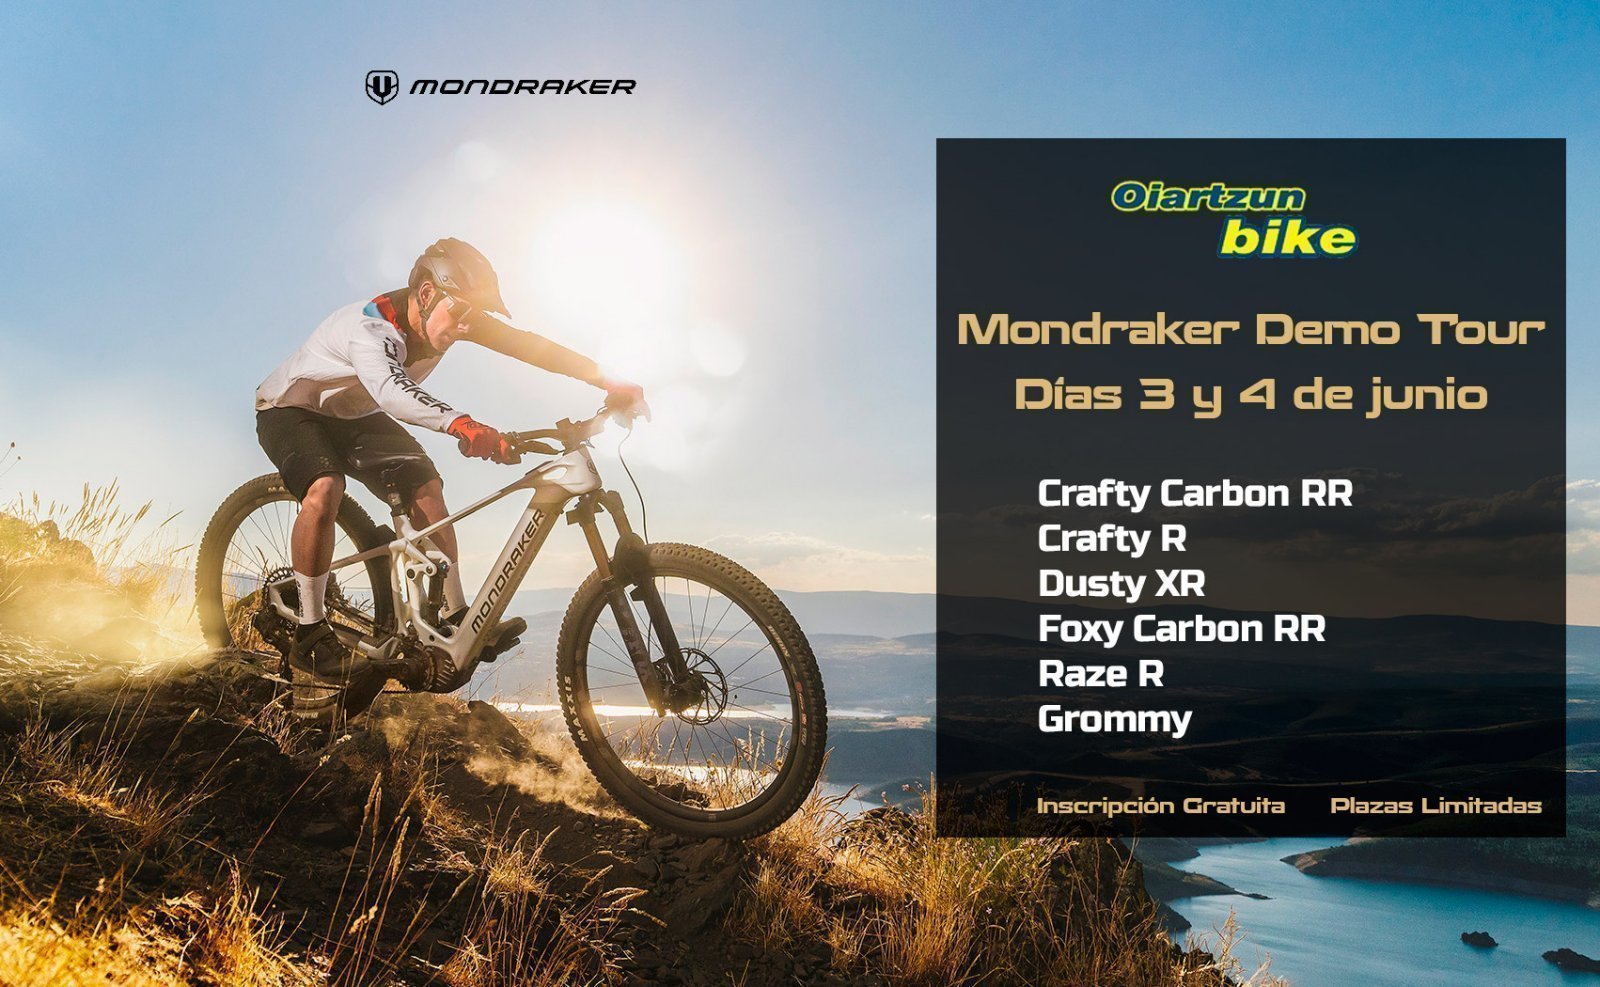 Descubre la gama de bicicletas Mondraker en los Demo Tour en Oiartzun Bike